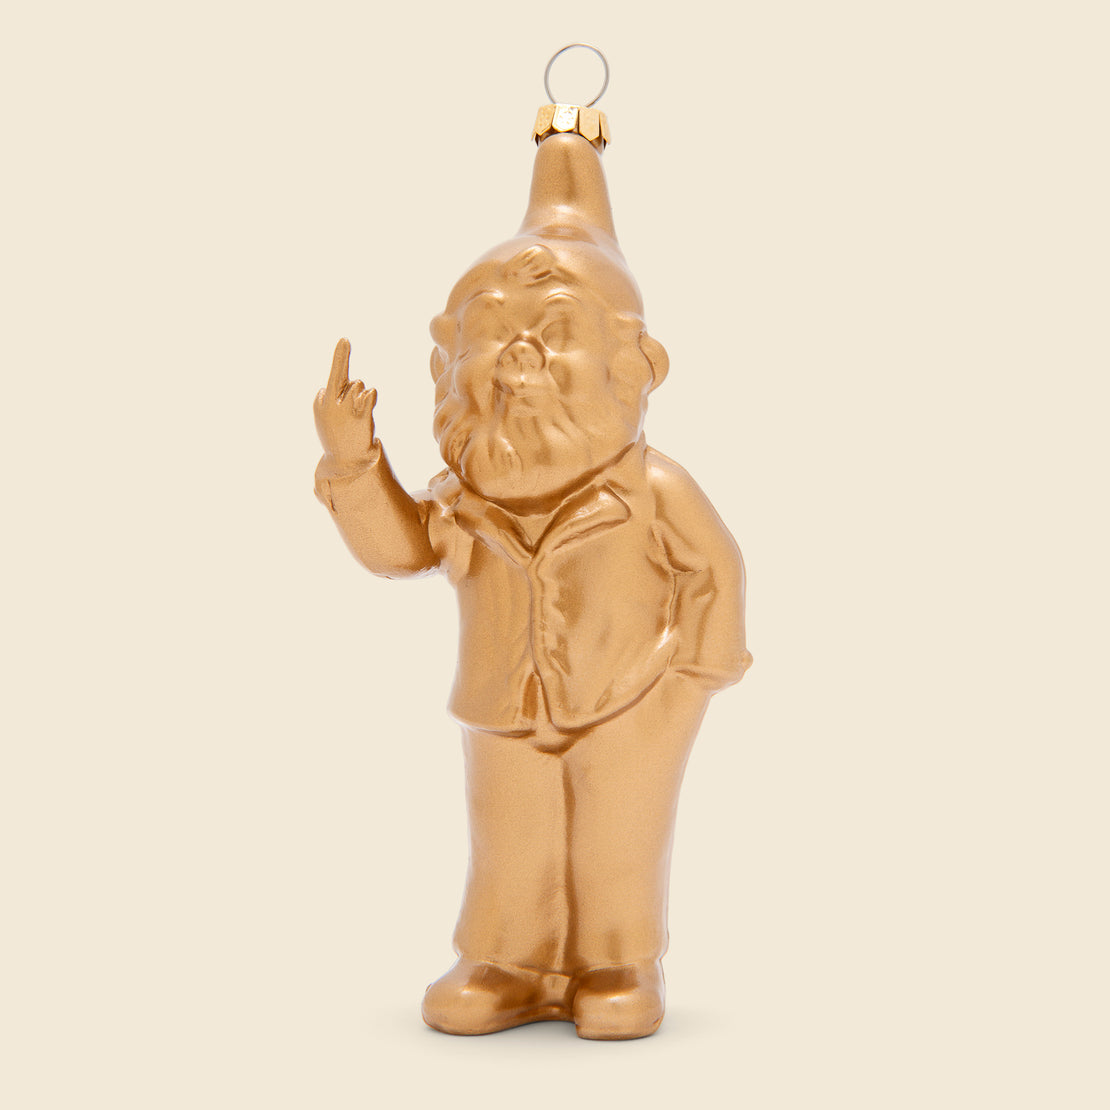 Home Ornament - Naughty Gnome